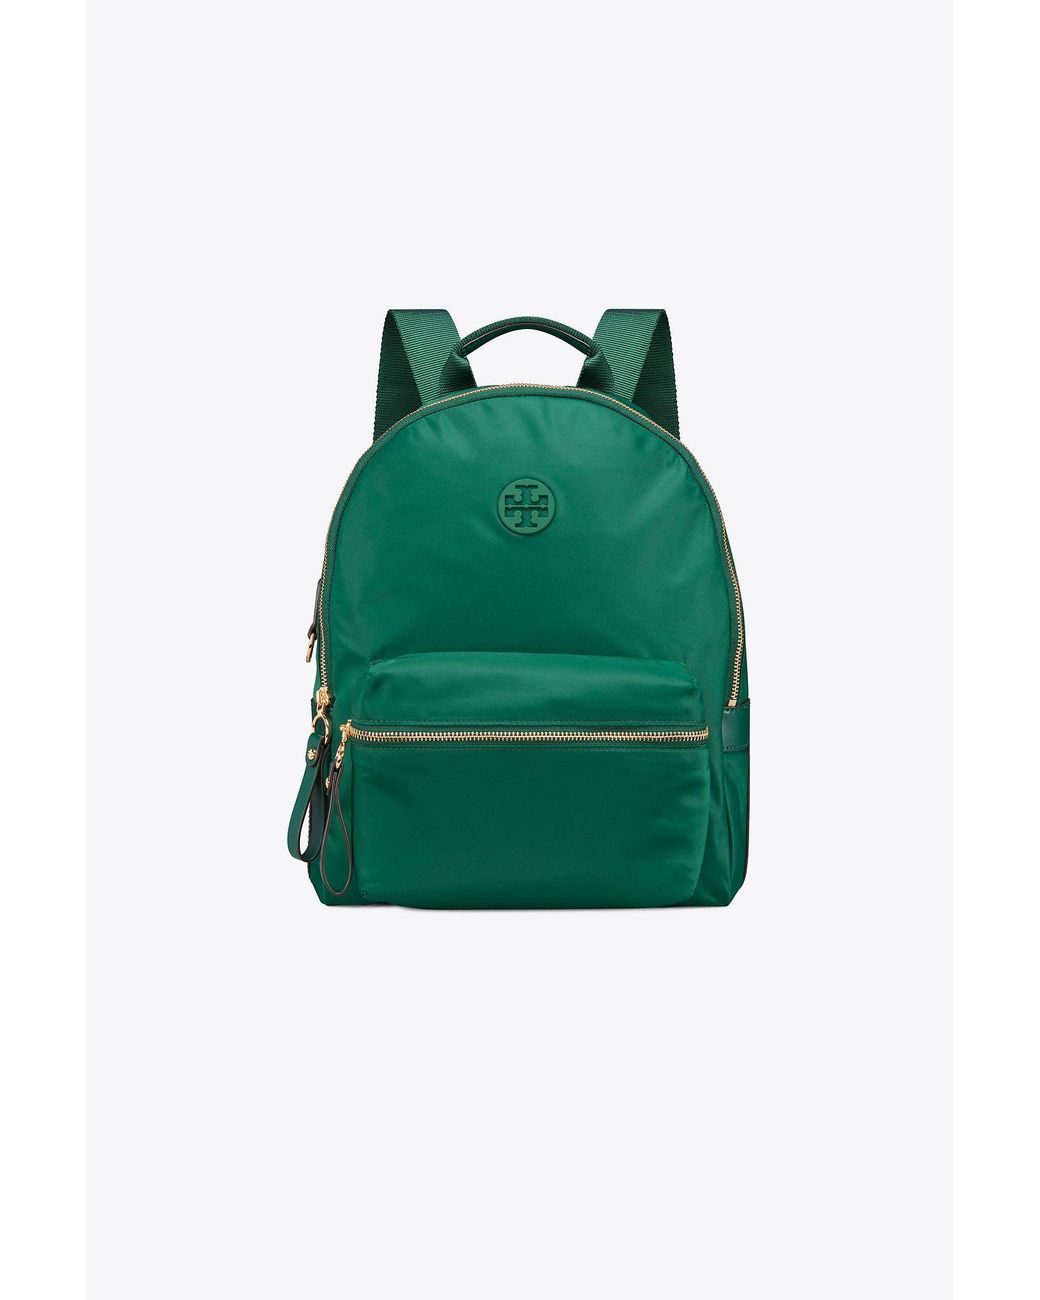 Tory Burch Tilda Zip Backpack in Green | Lyst